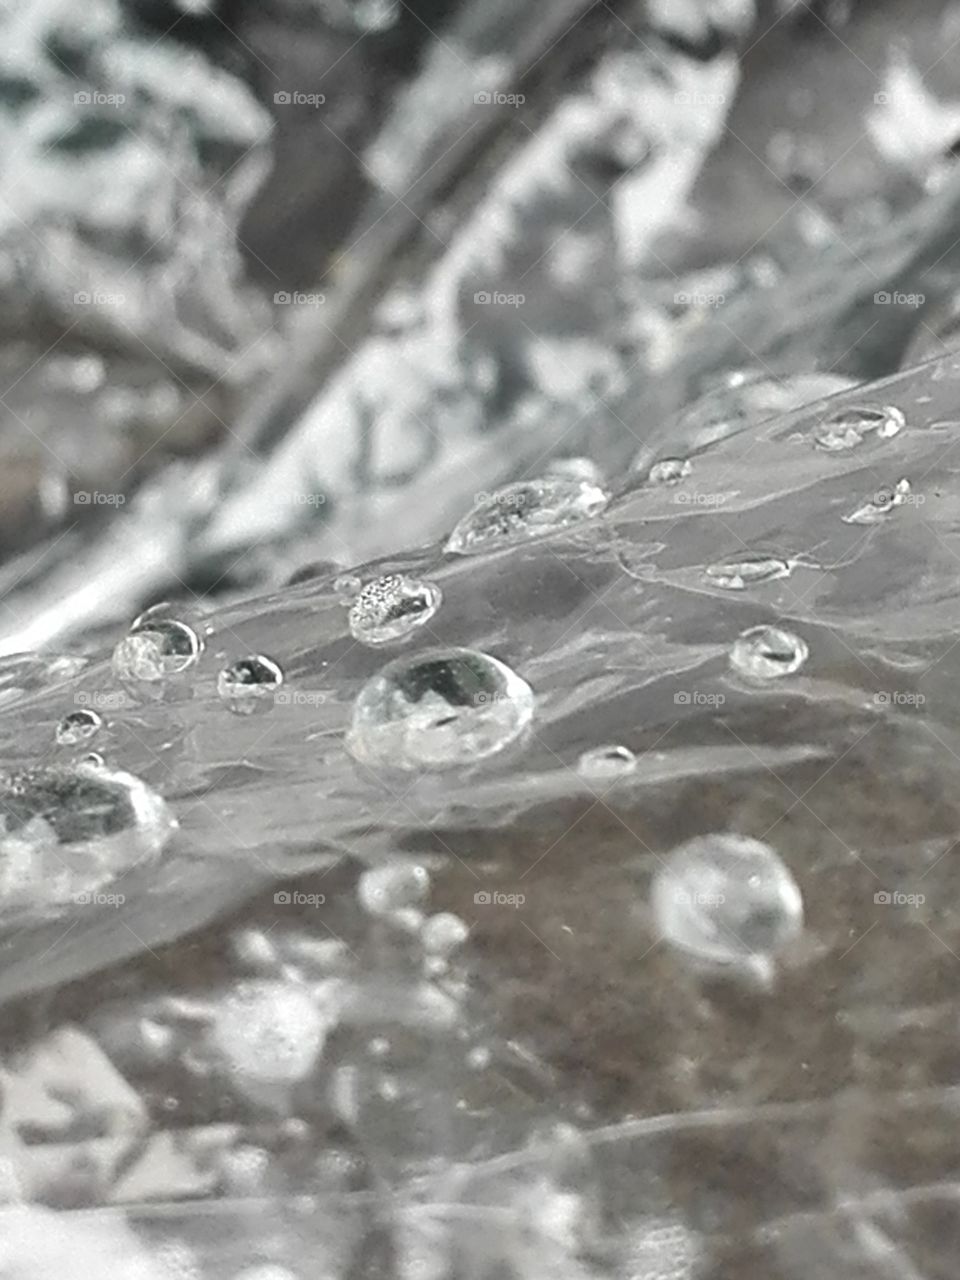 Raindrops on a sheet